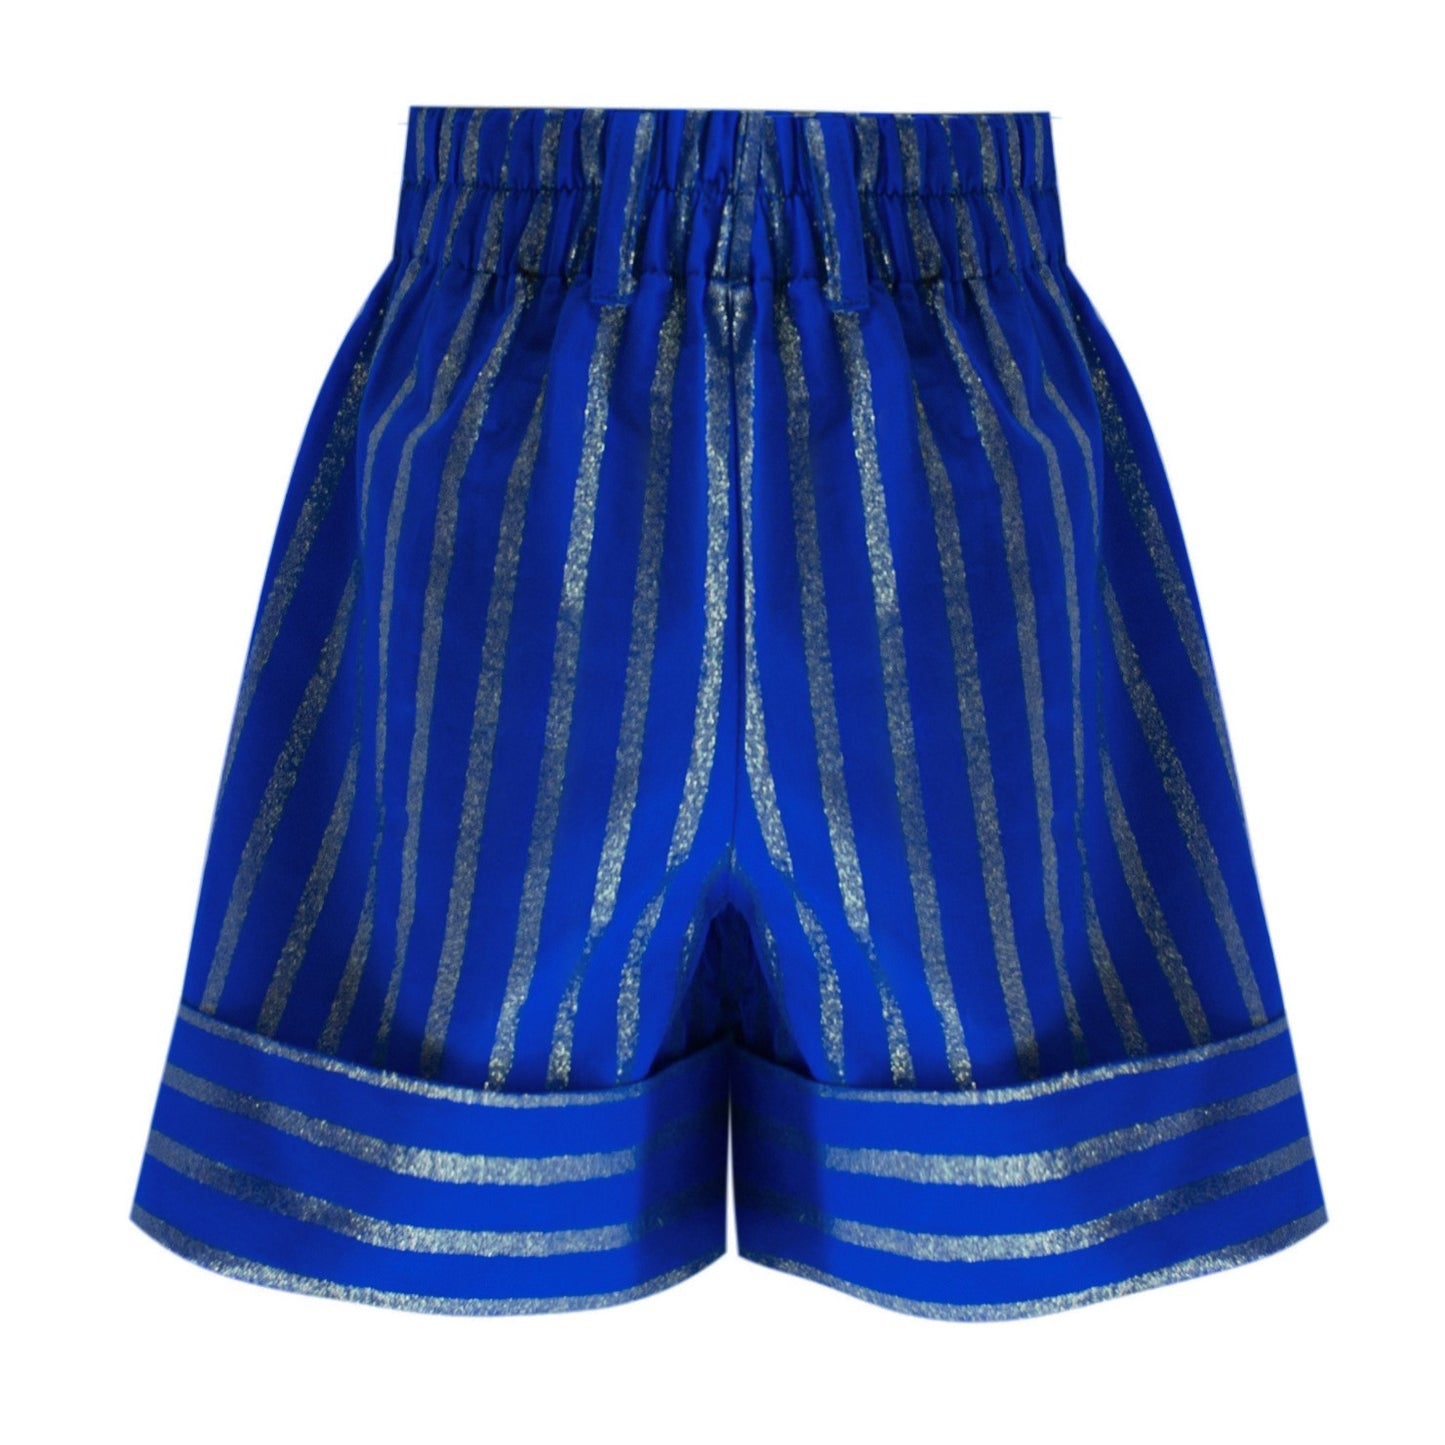 Striped Glittery Shorts in Blue